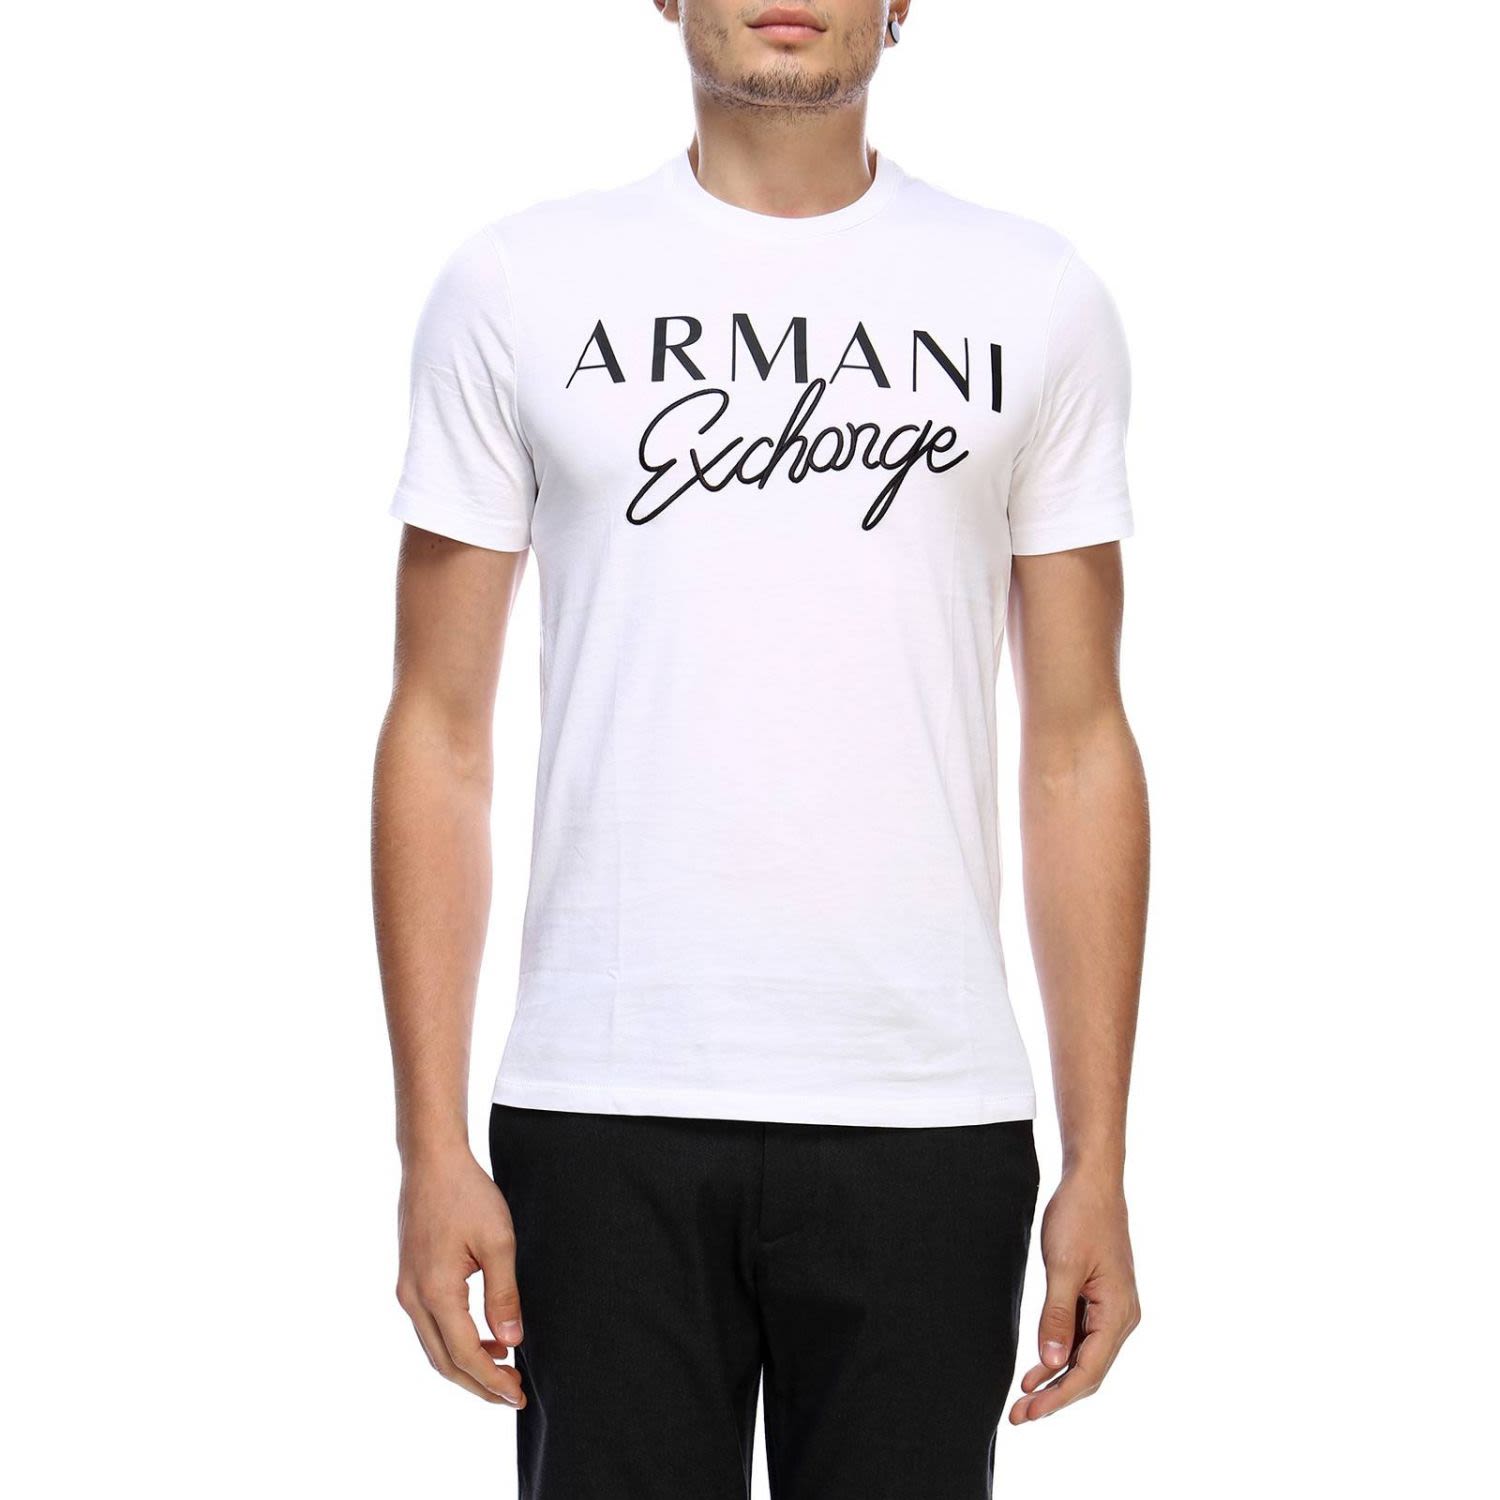 Armani exchange t shirt zalando top brands tops, Gold mermaid dress long sleeve, hard rock cafe t shirt dublin. 